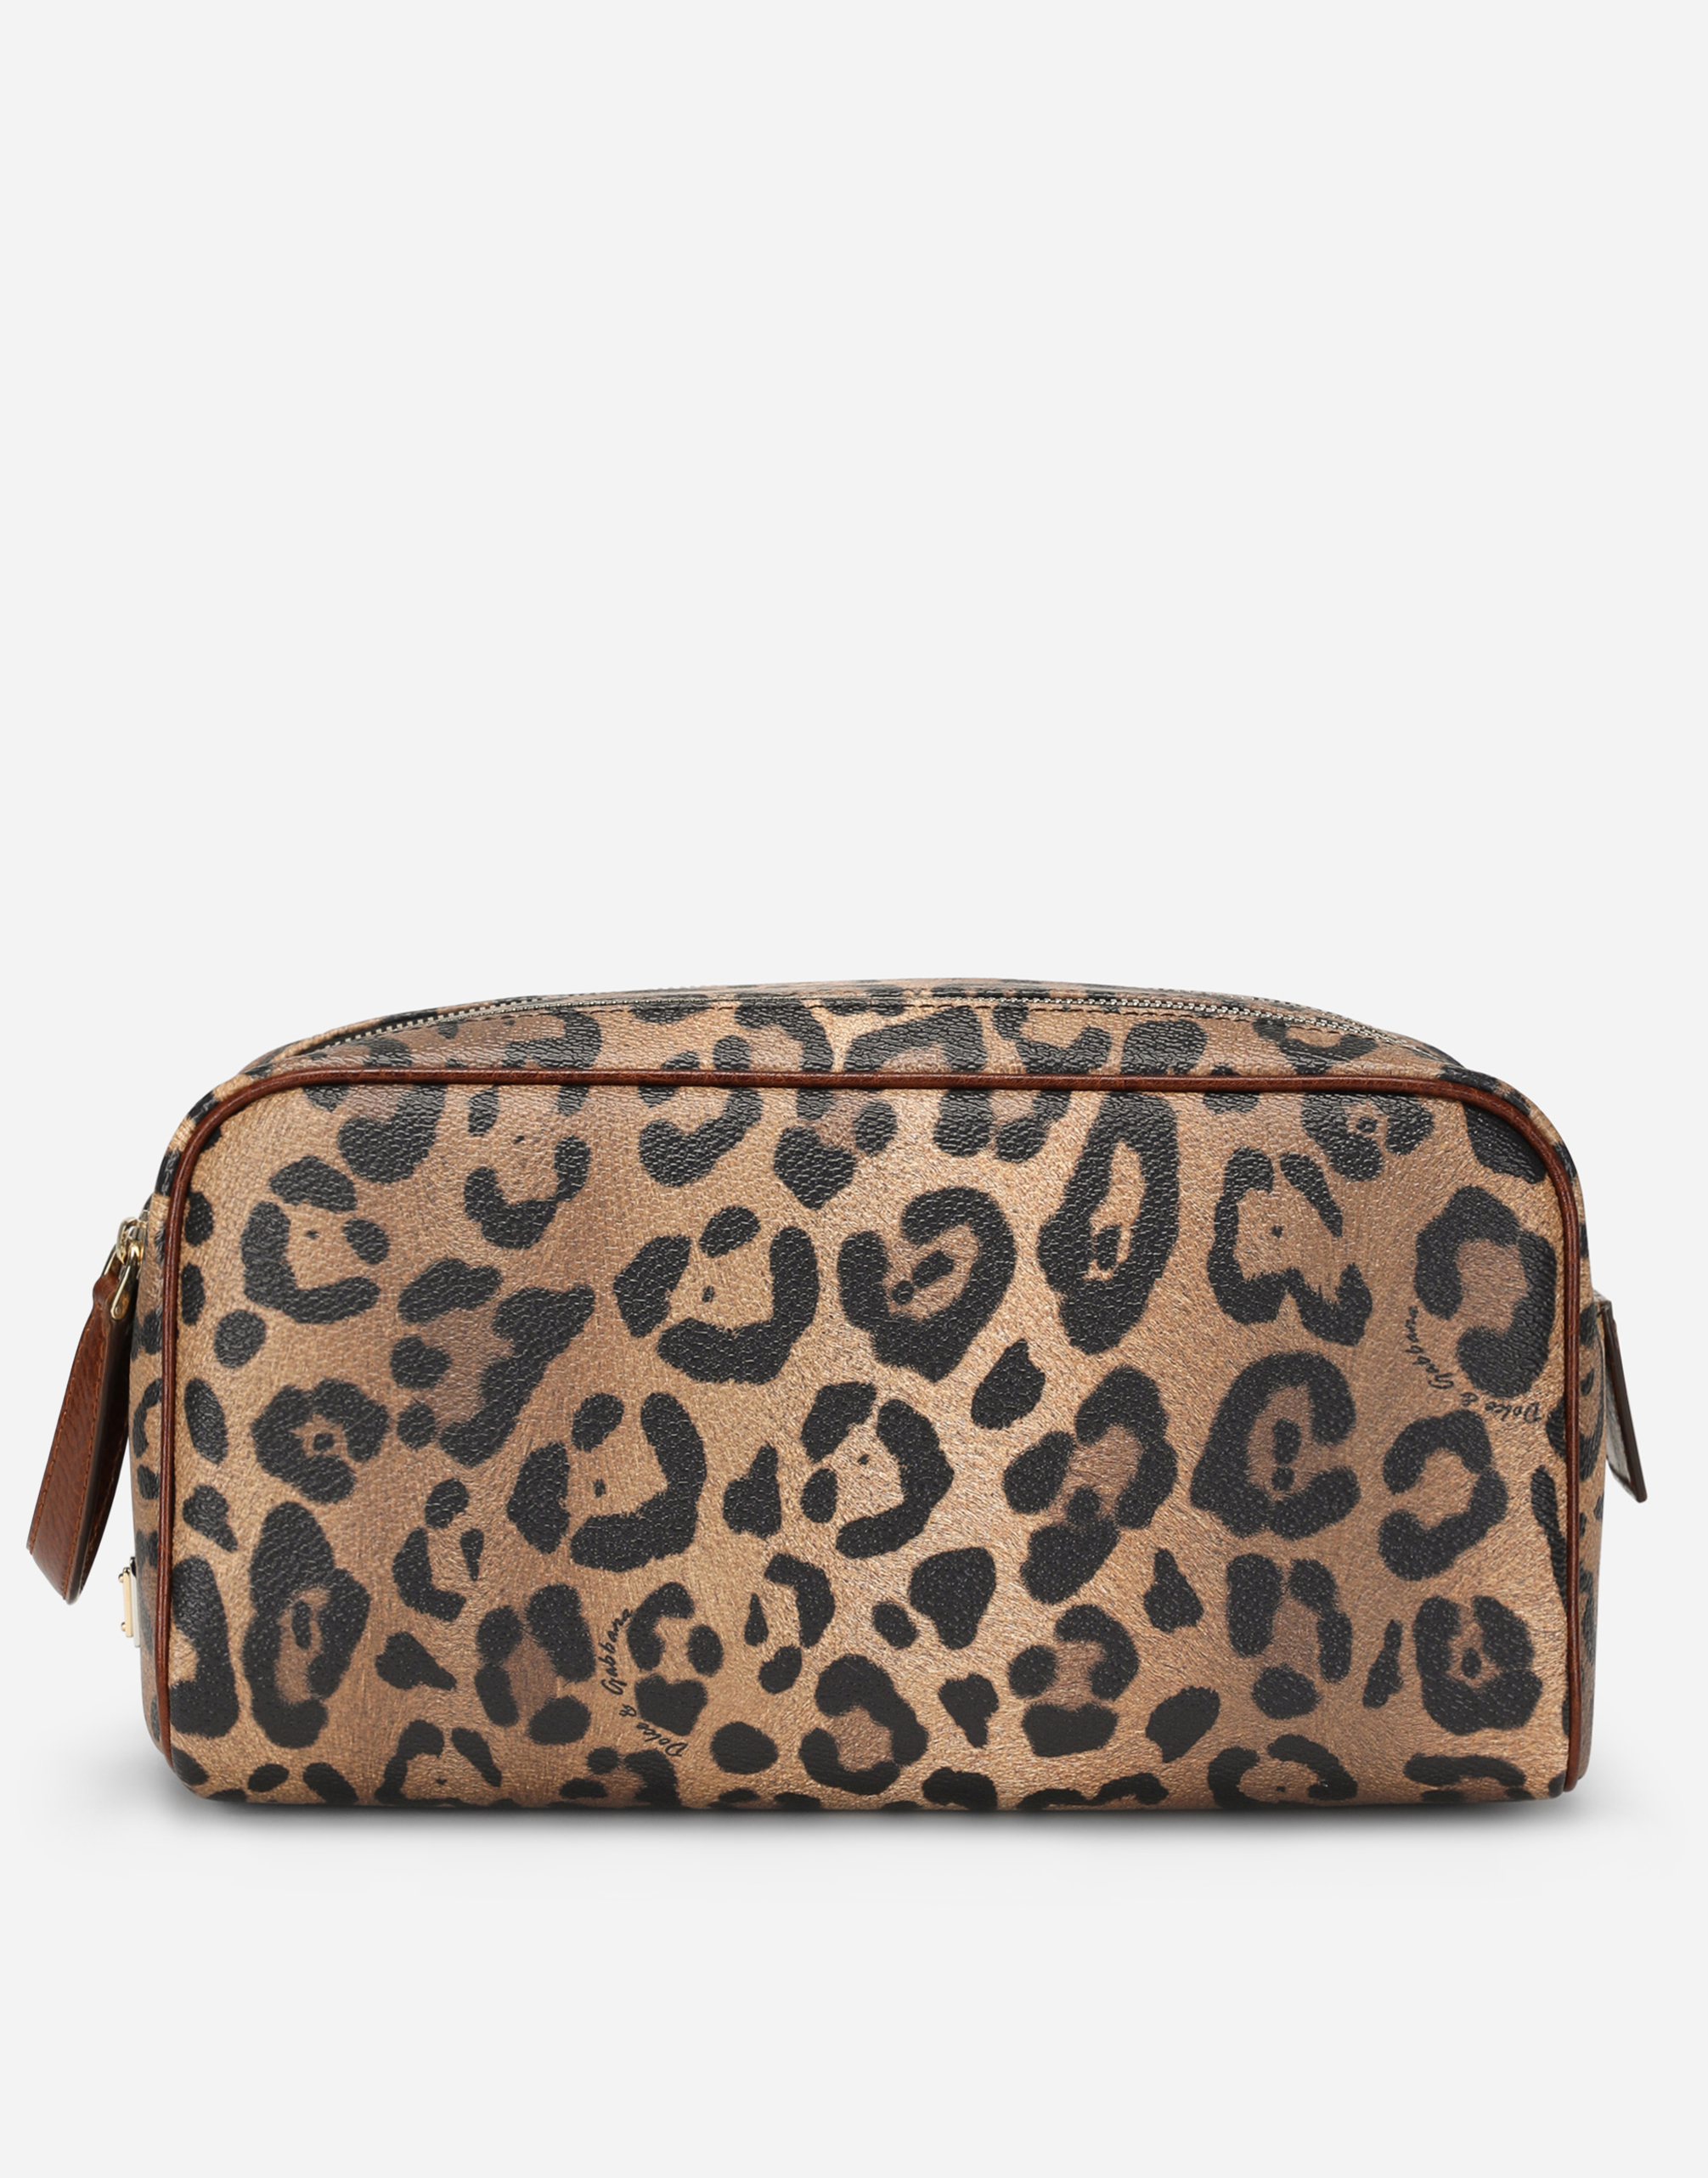 Leopard print make up bag | Crespo Leo Dolce&Gabbana